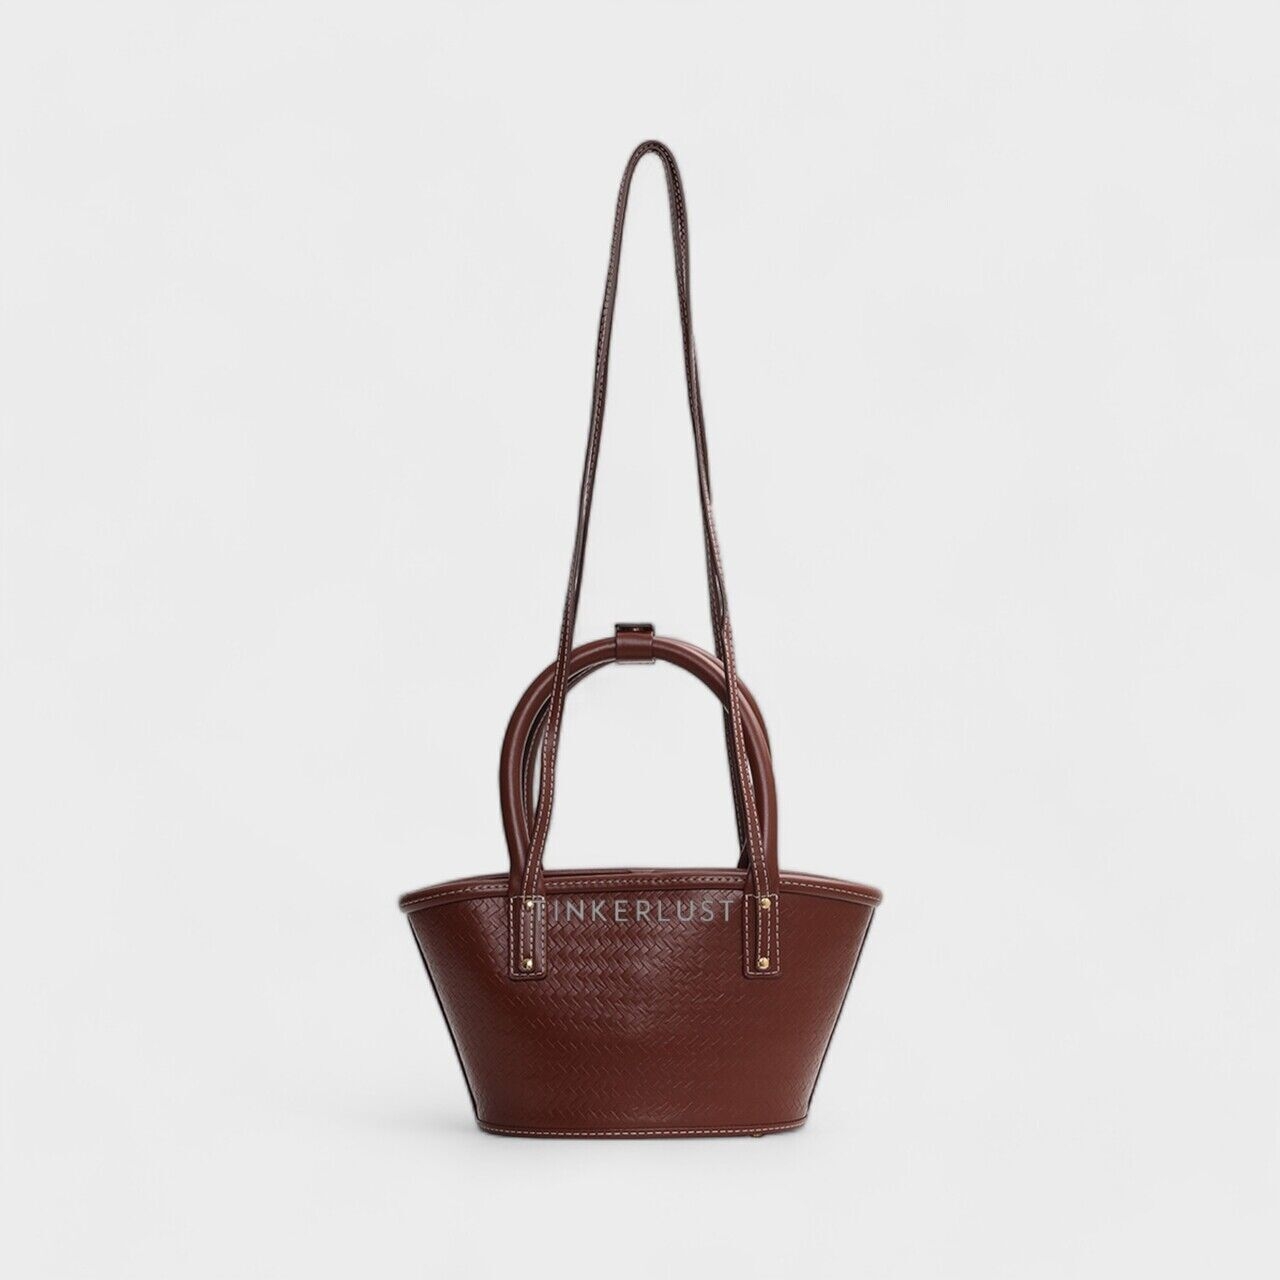 Jacquemus Le Petit Panier Soli Cuir in Weave Embossed Brown Smooth Leather Basket Bag